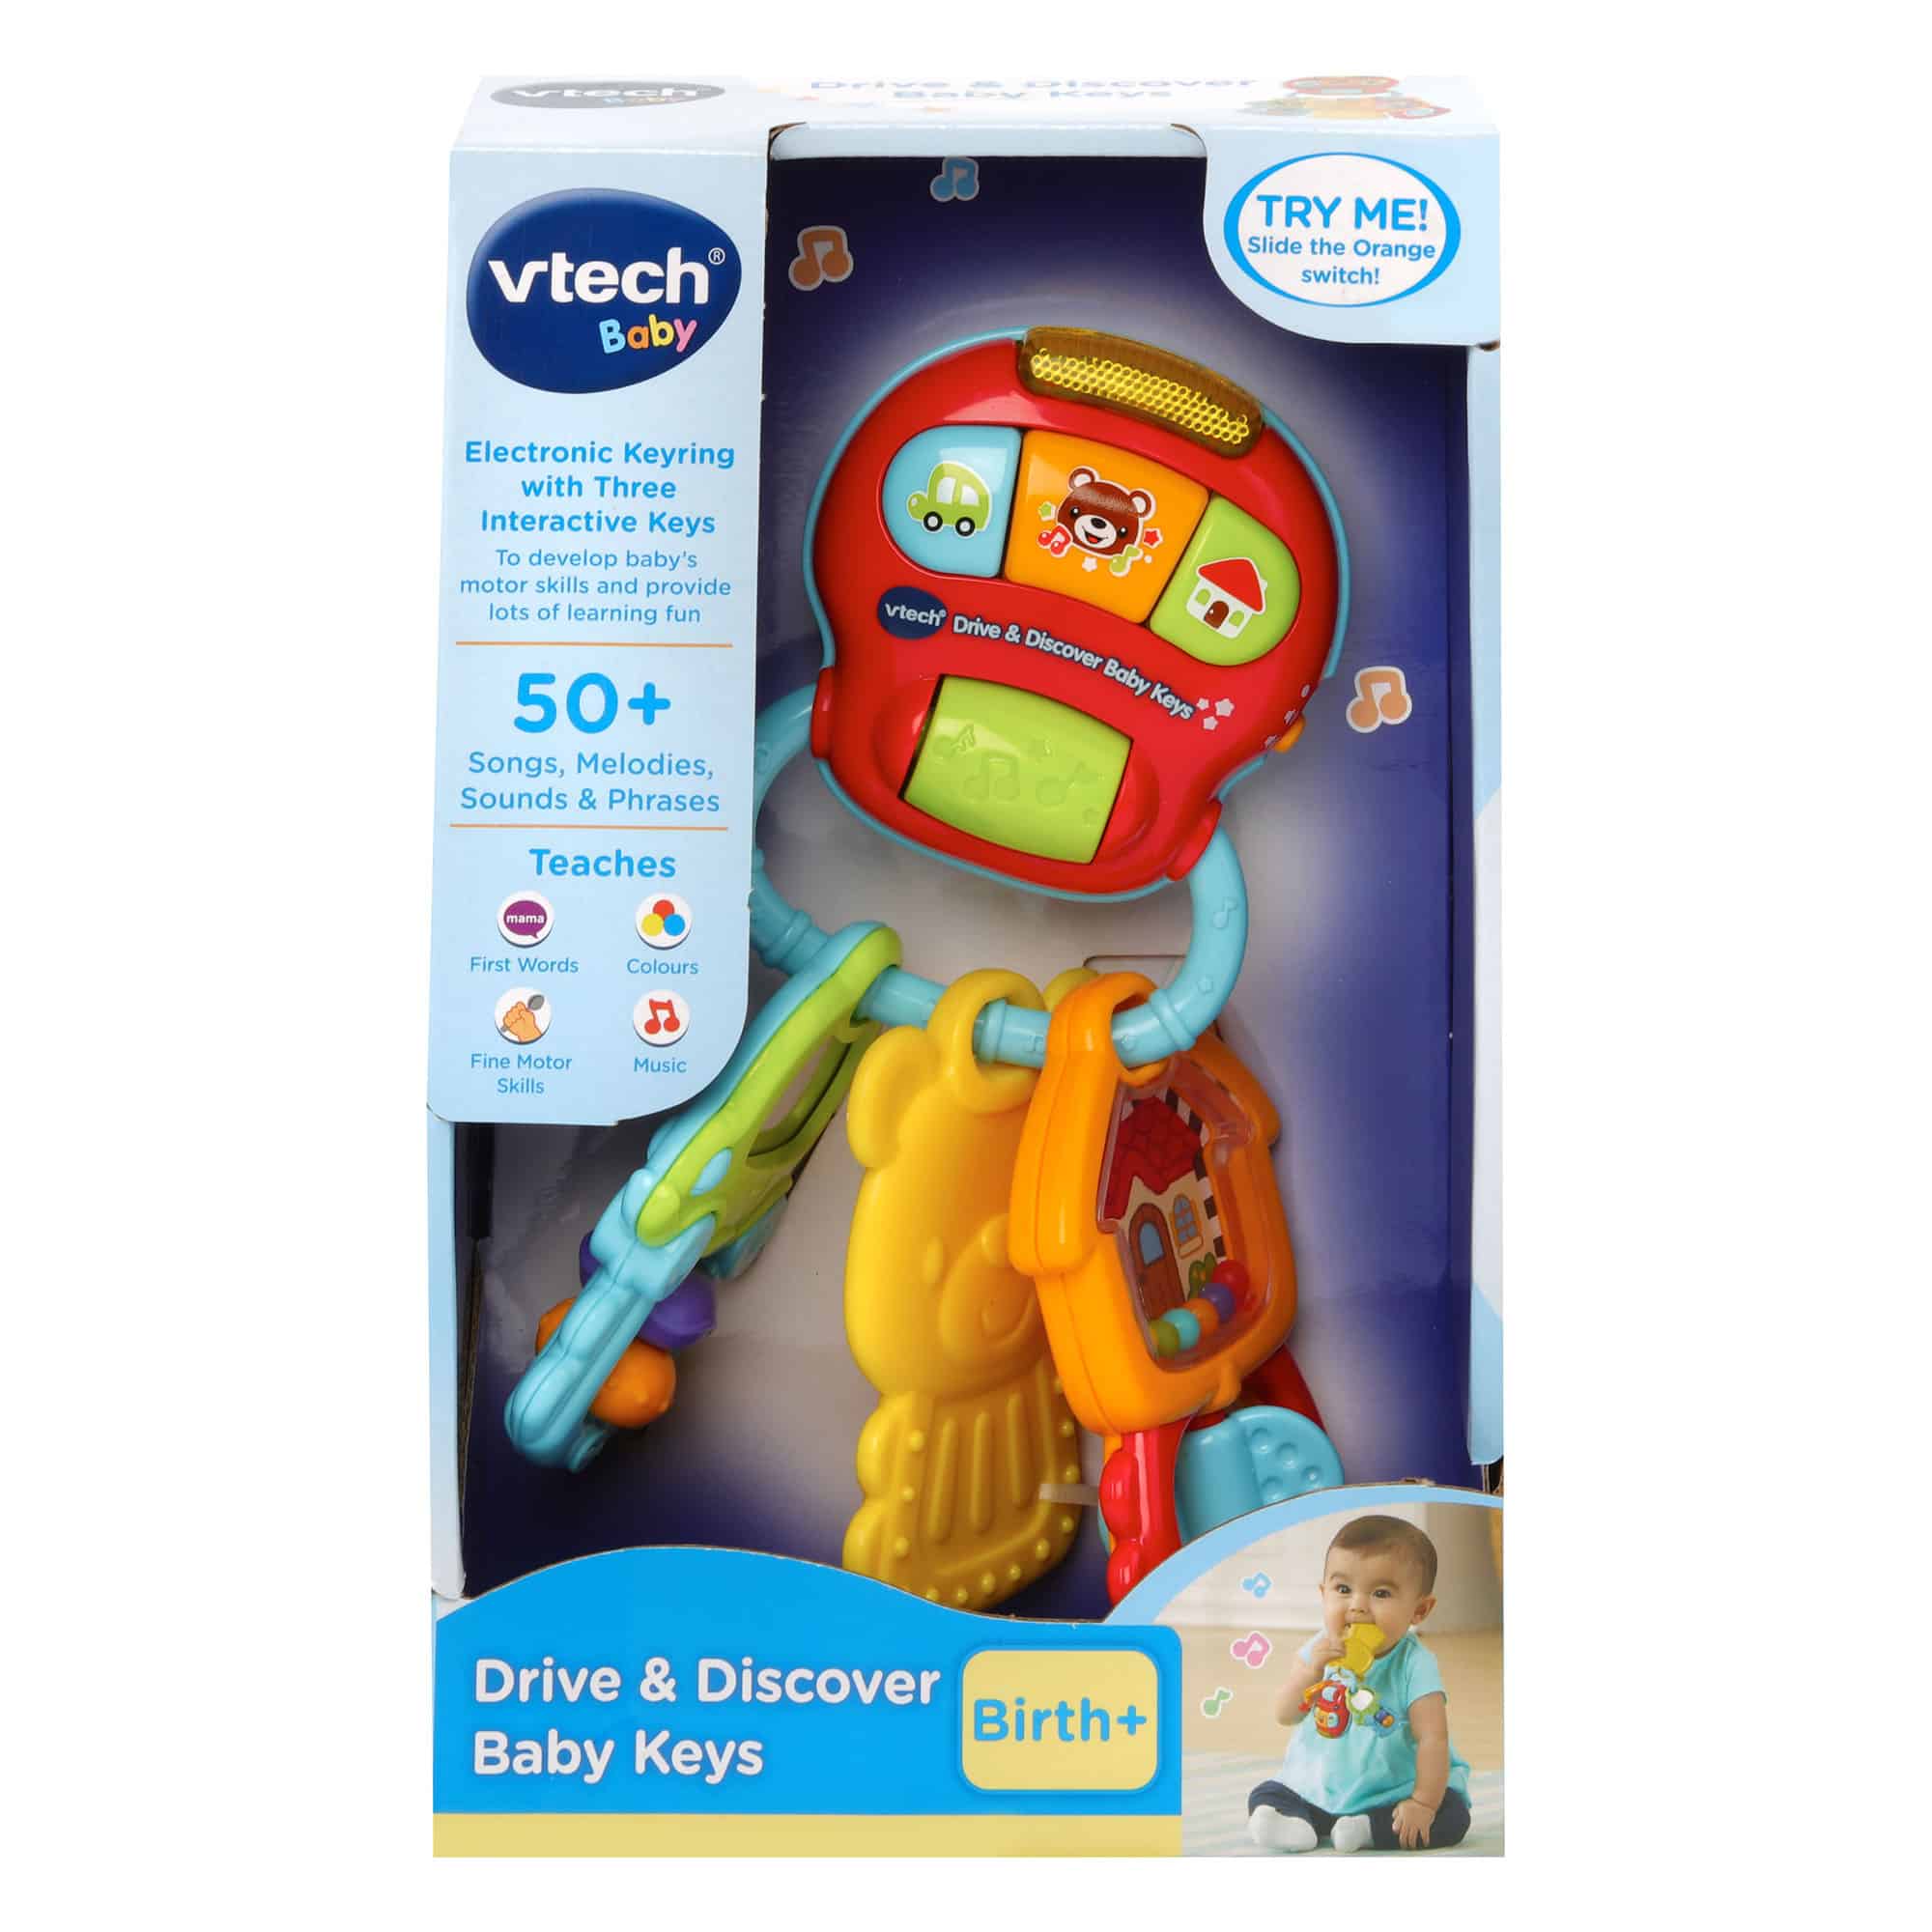 Vtech Baby - Drive & Discover Baby Keys